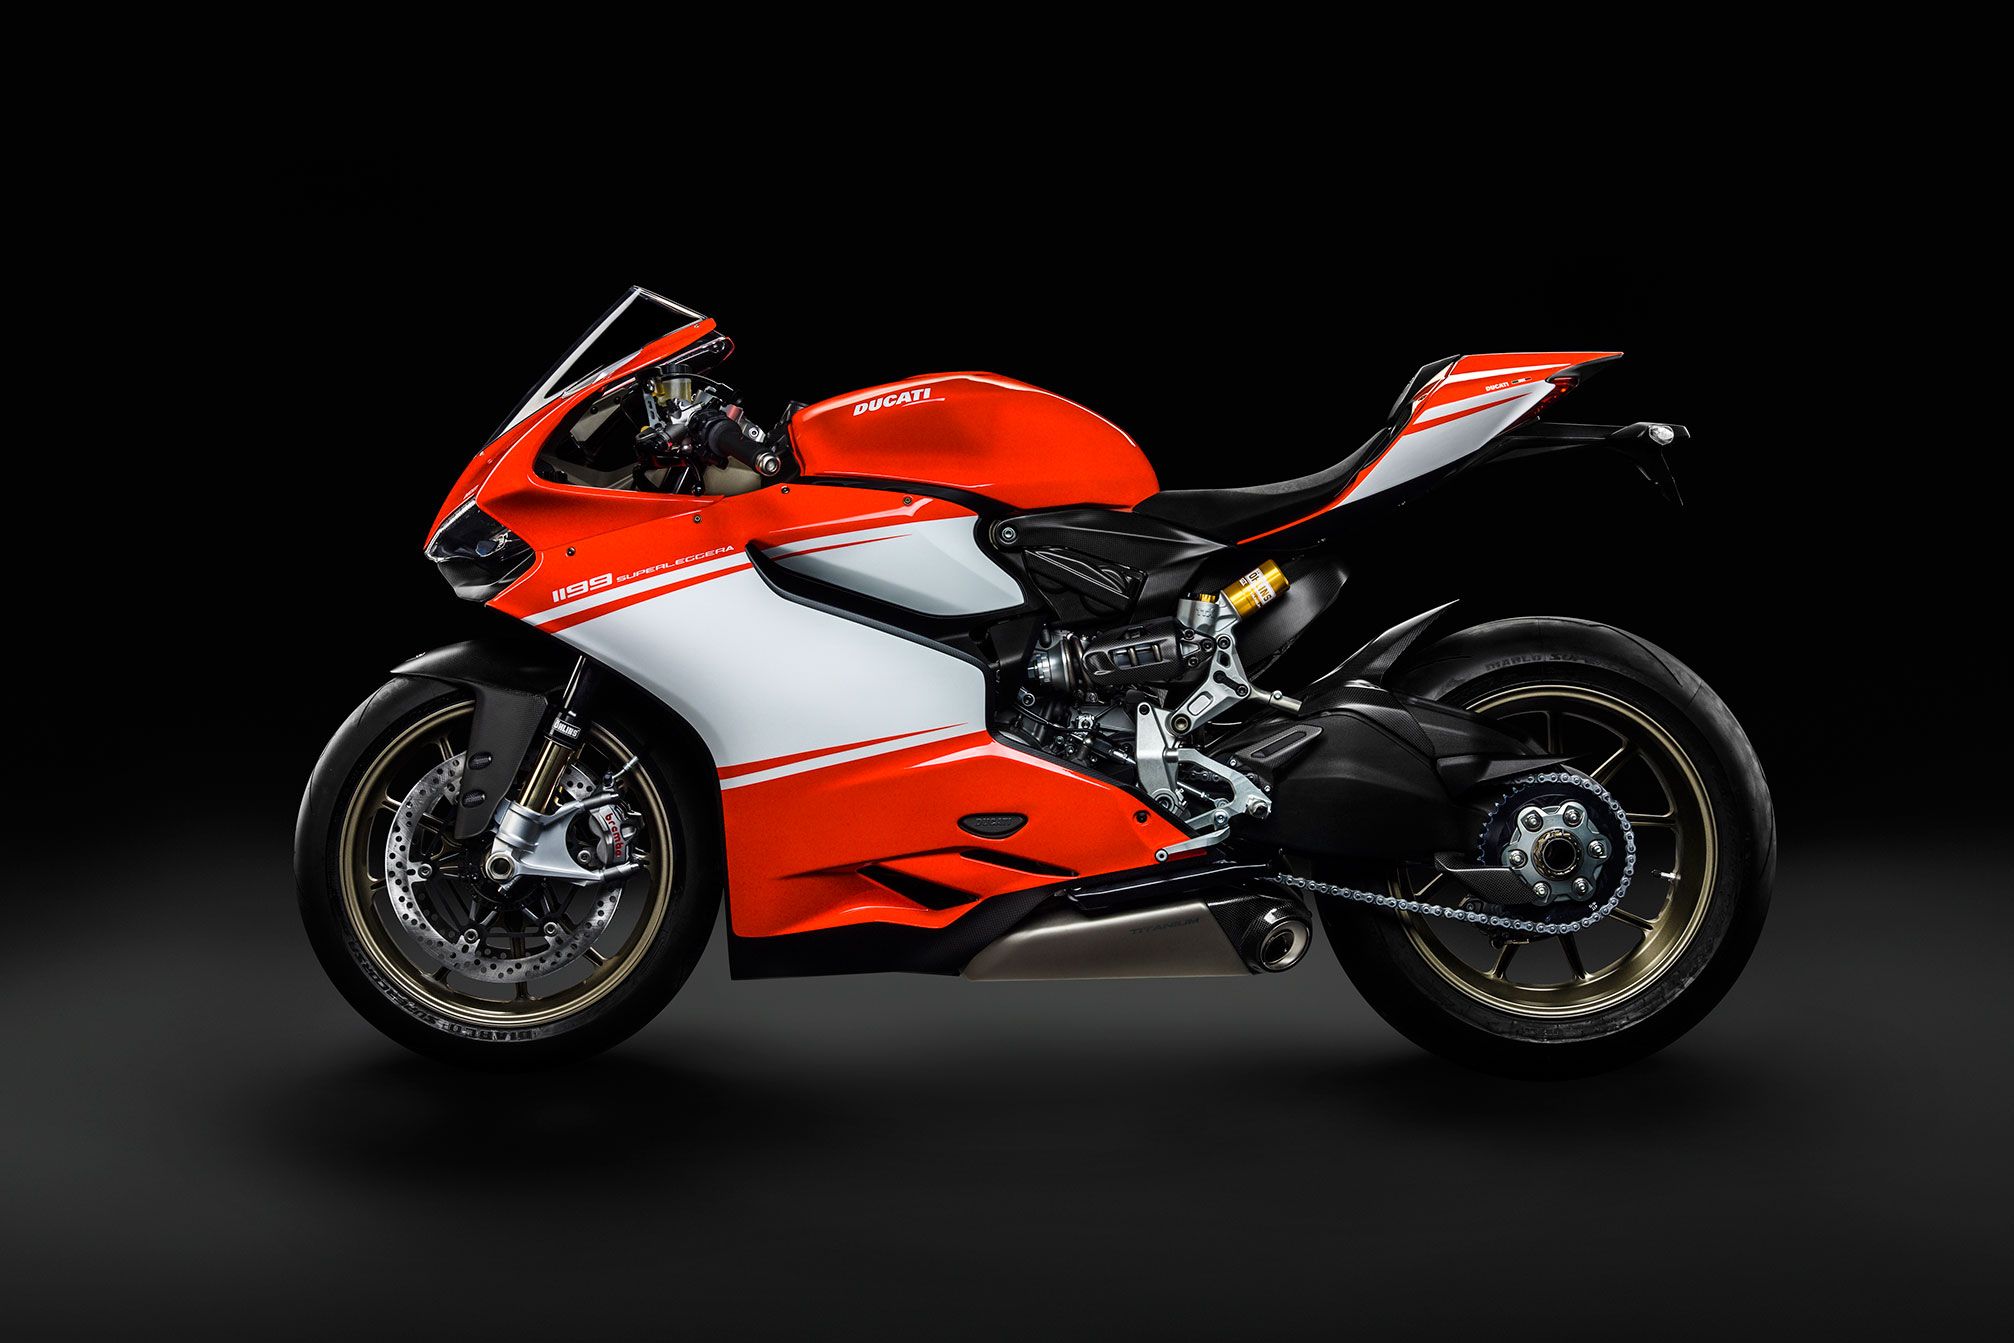 2014 Ducati Superbike 1199 Superleggera h wallpaper | 2014x1343 ...